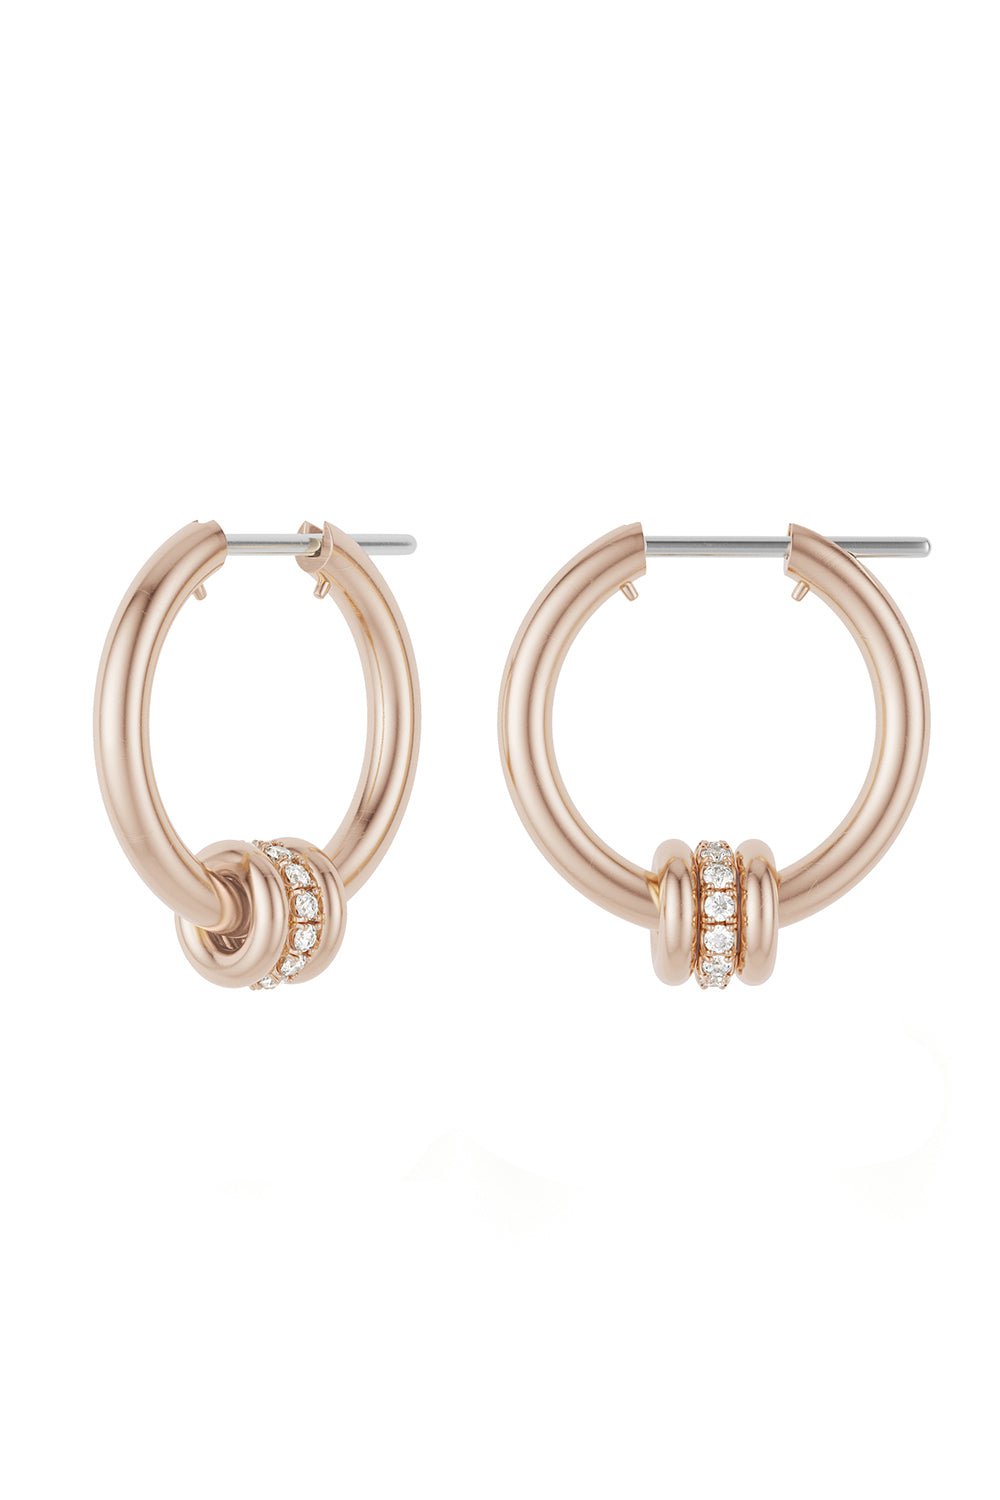 SPINELLI KILCOLLIN-Ara Rose Hoop Earrings-ROSE GOLD